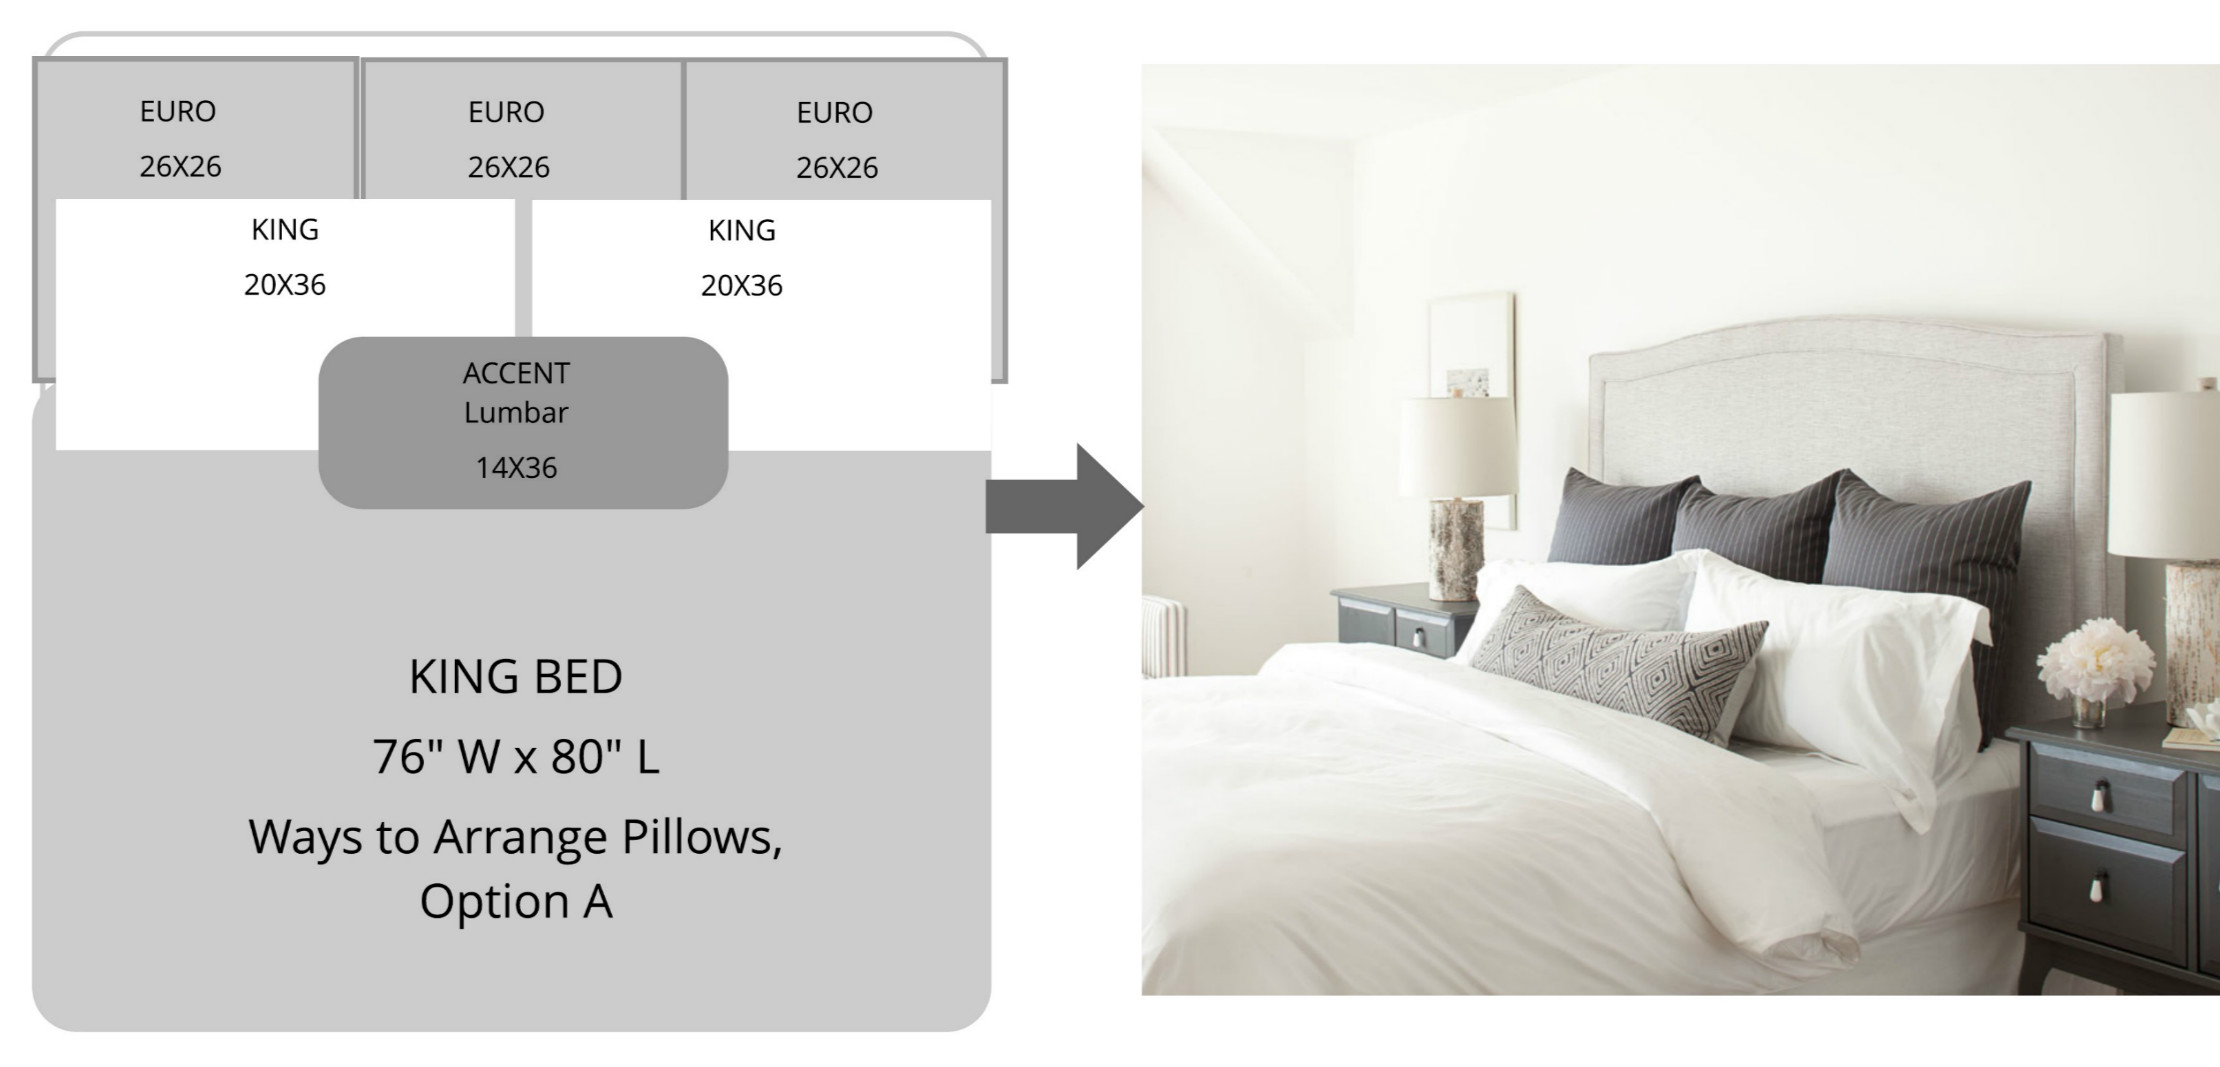 Basic pillow arrangement on a King bed